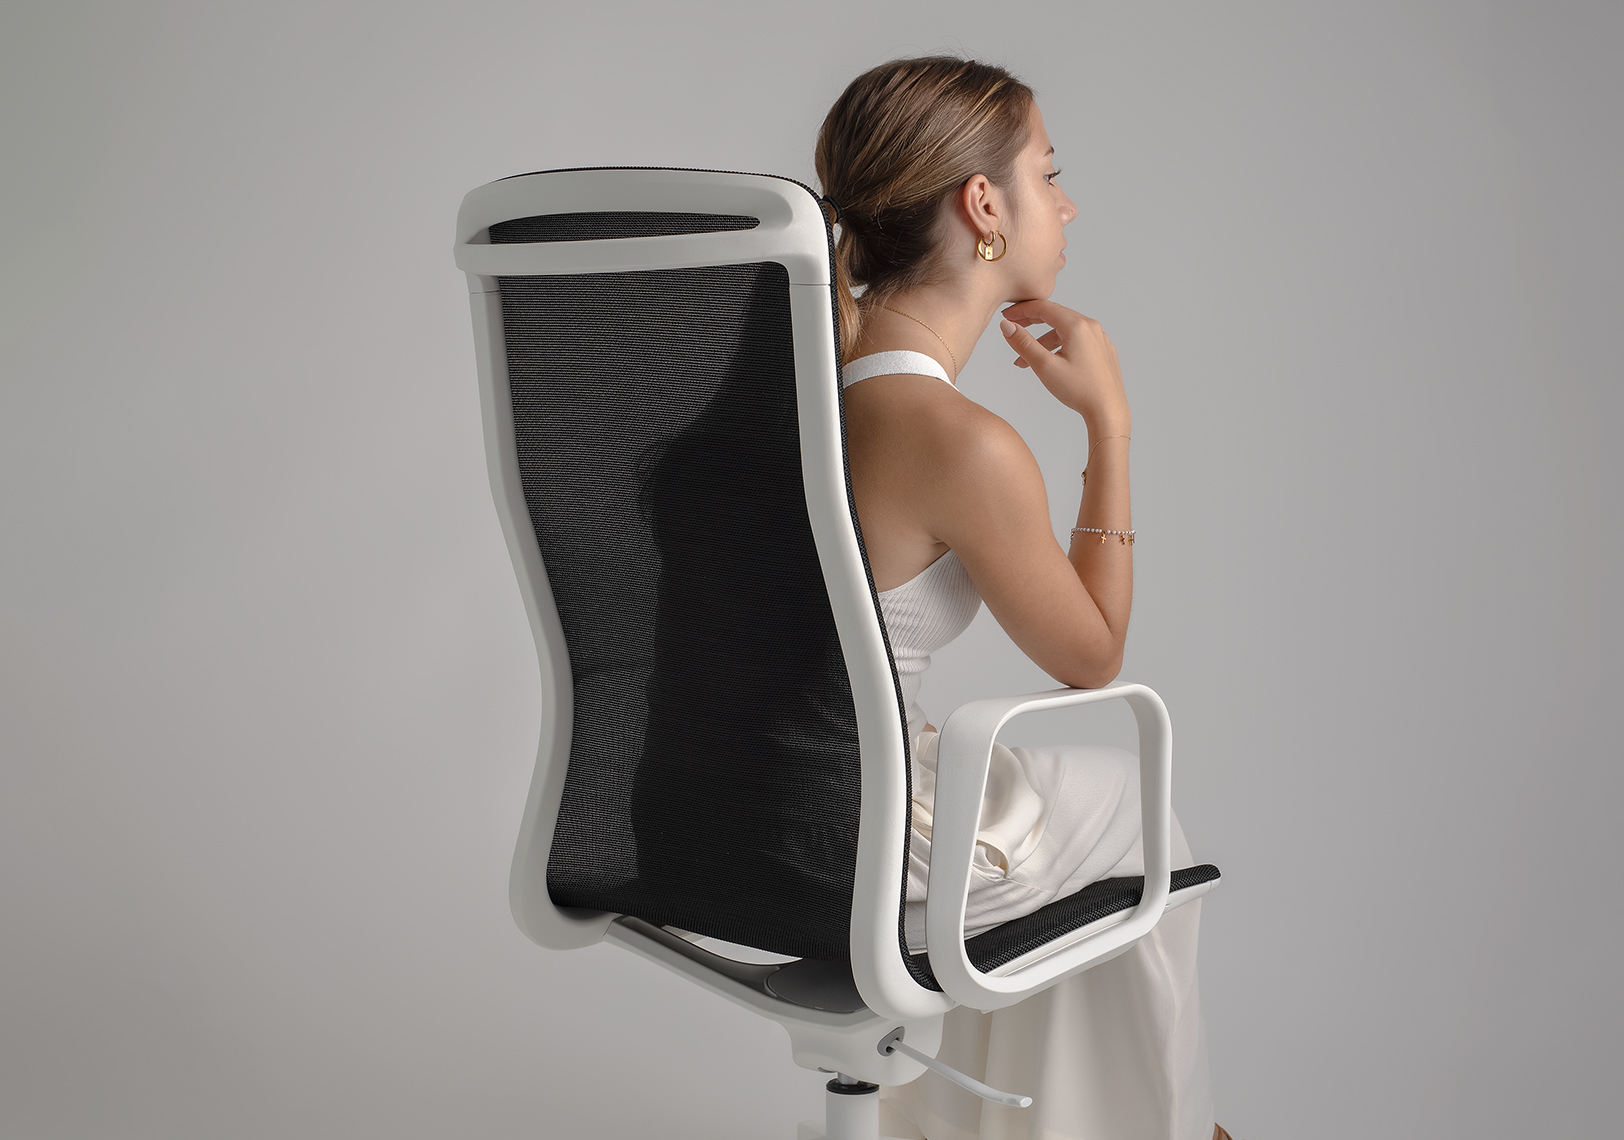 The chair that provides lightness